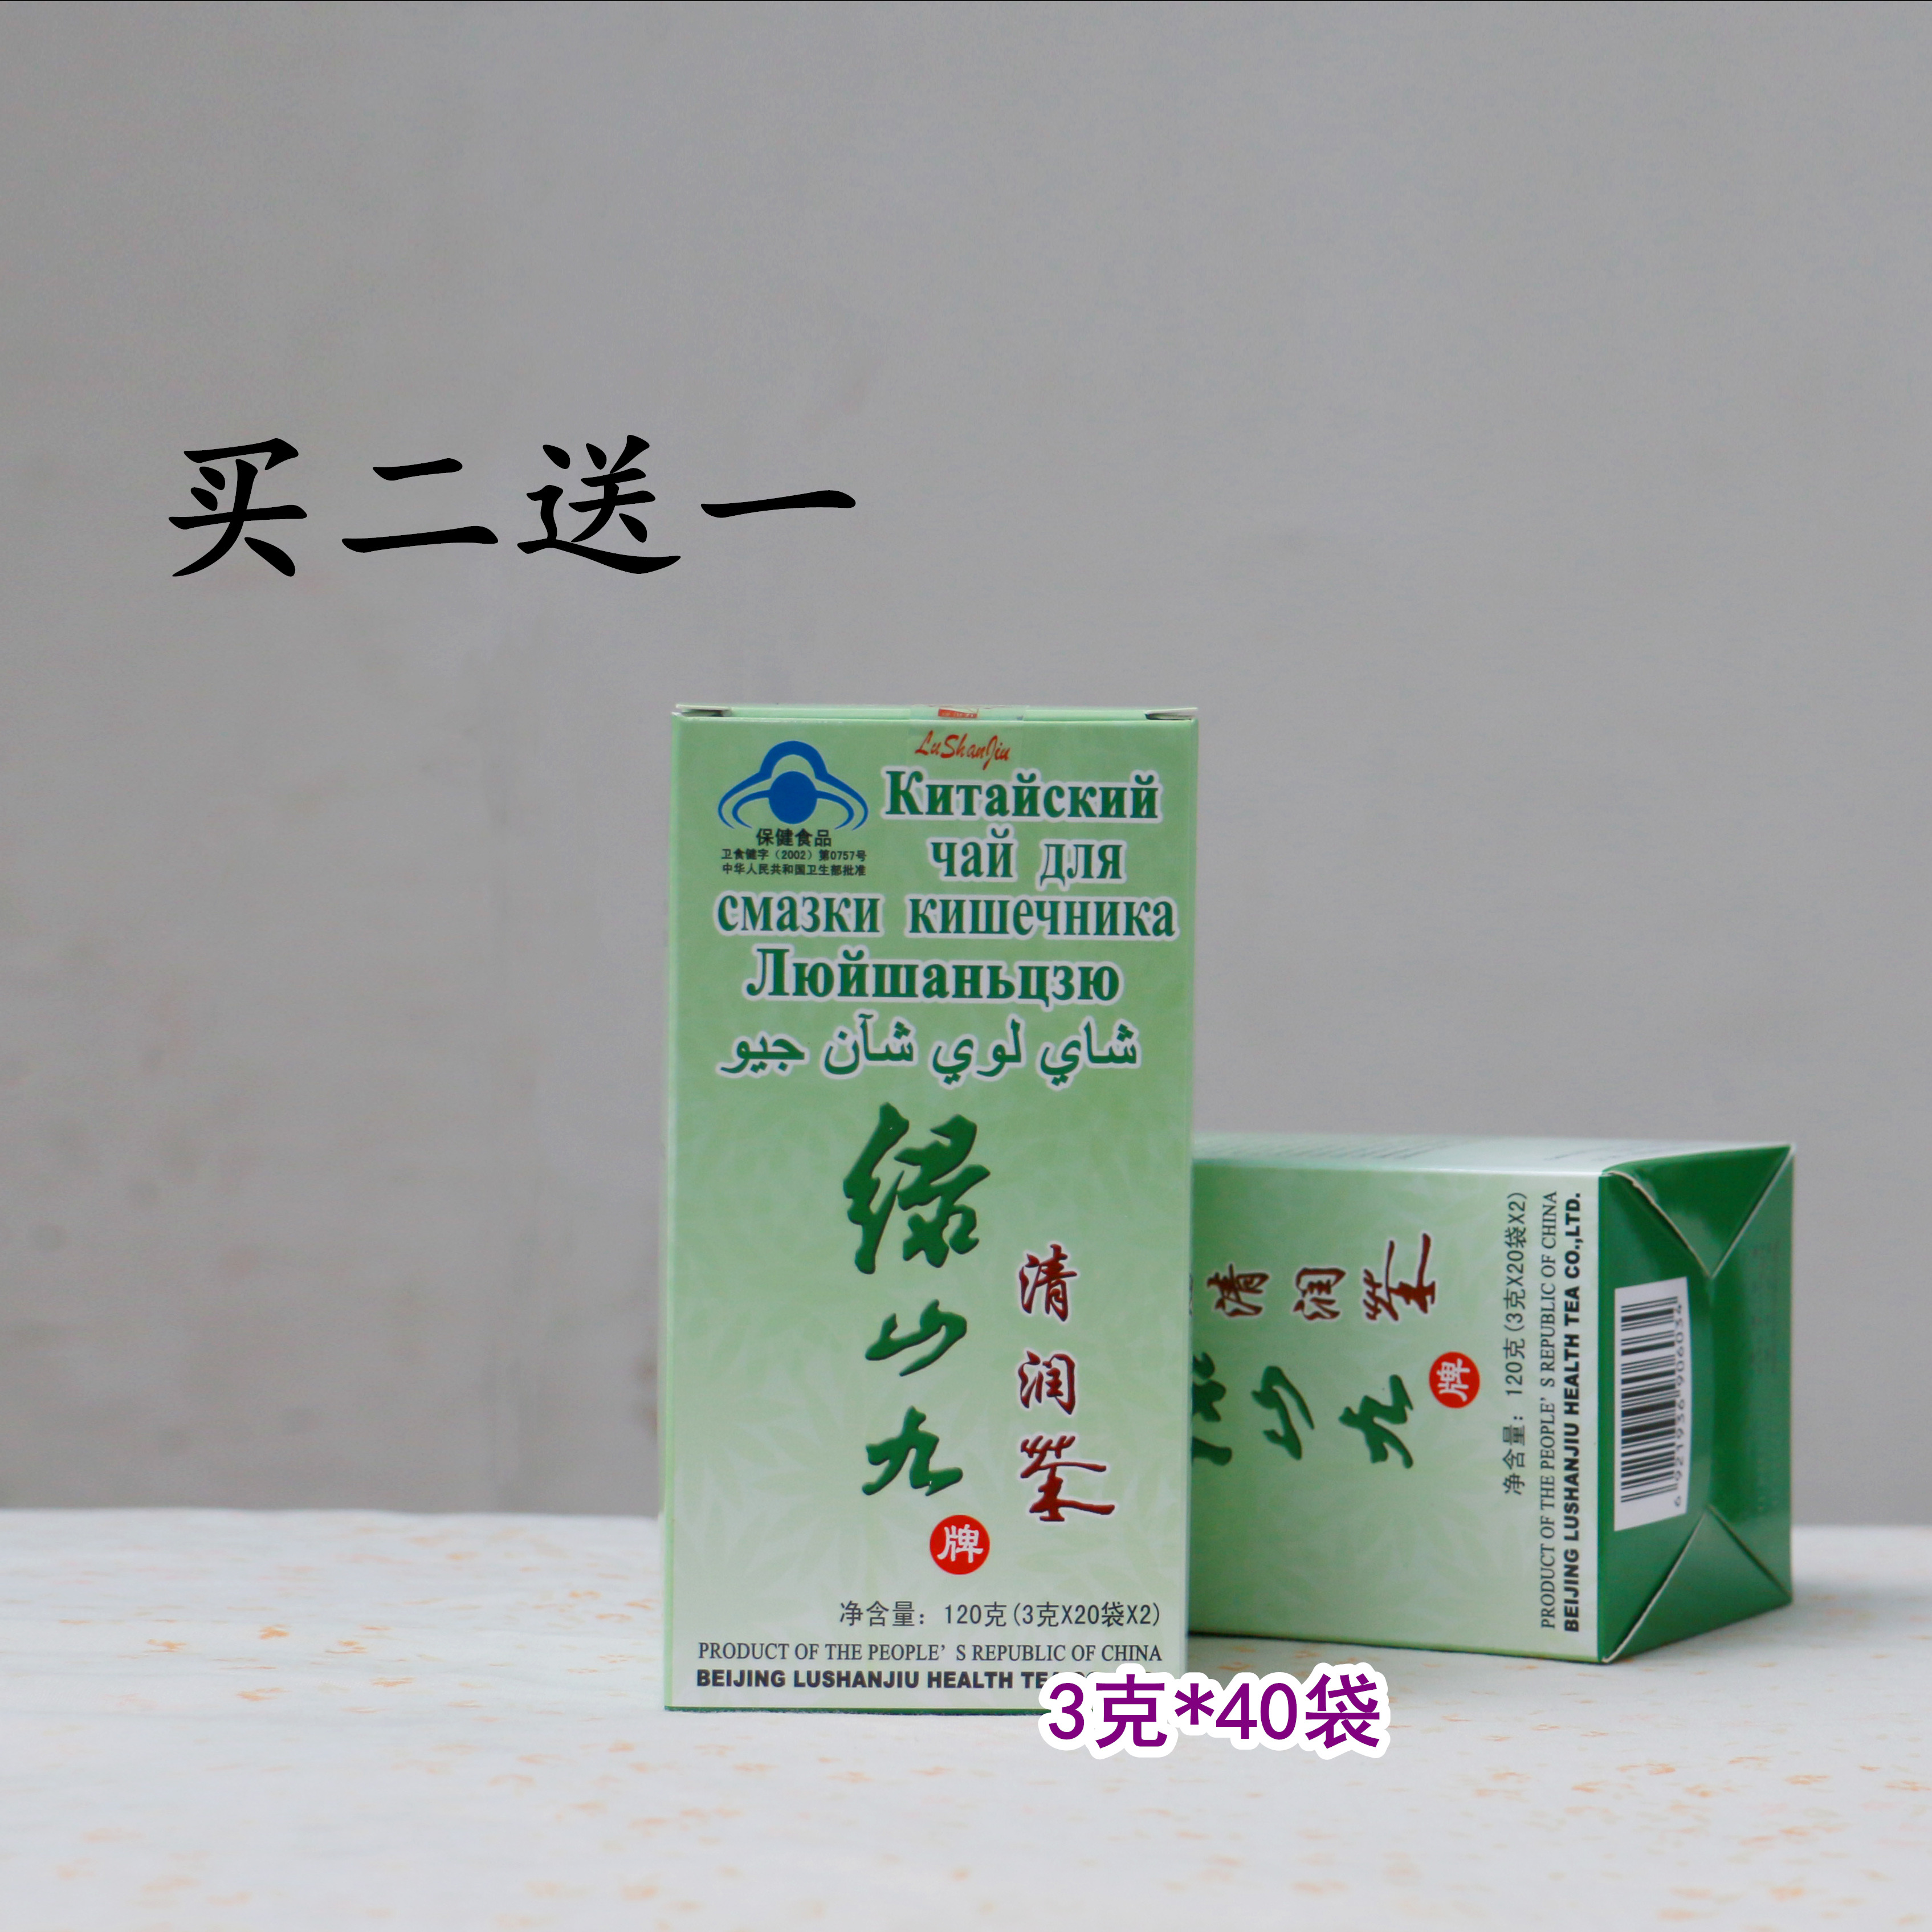 Green Mountain Nine Brand Qingrun Tea (3g*20 bags*2) package in 2019